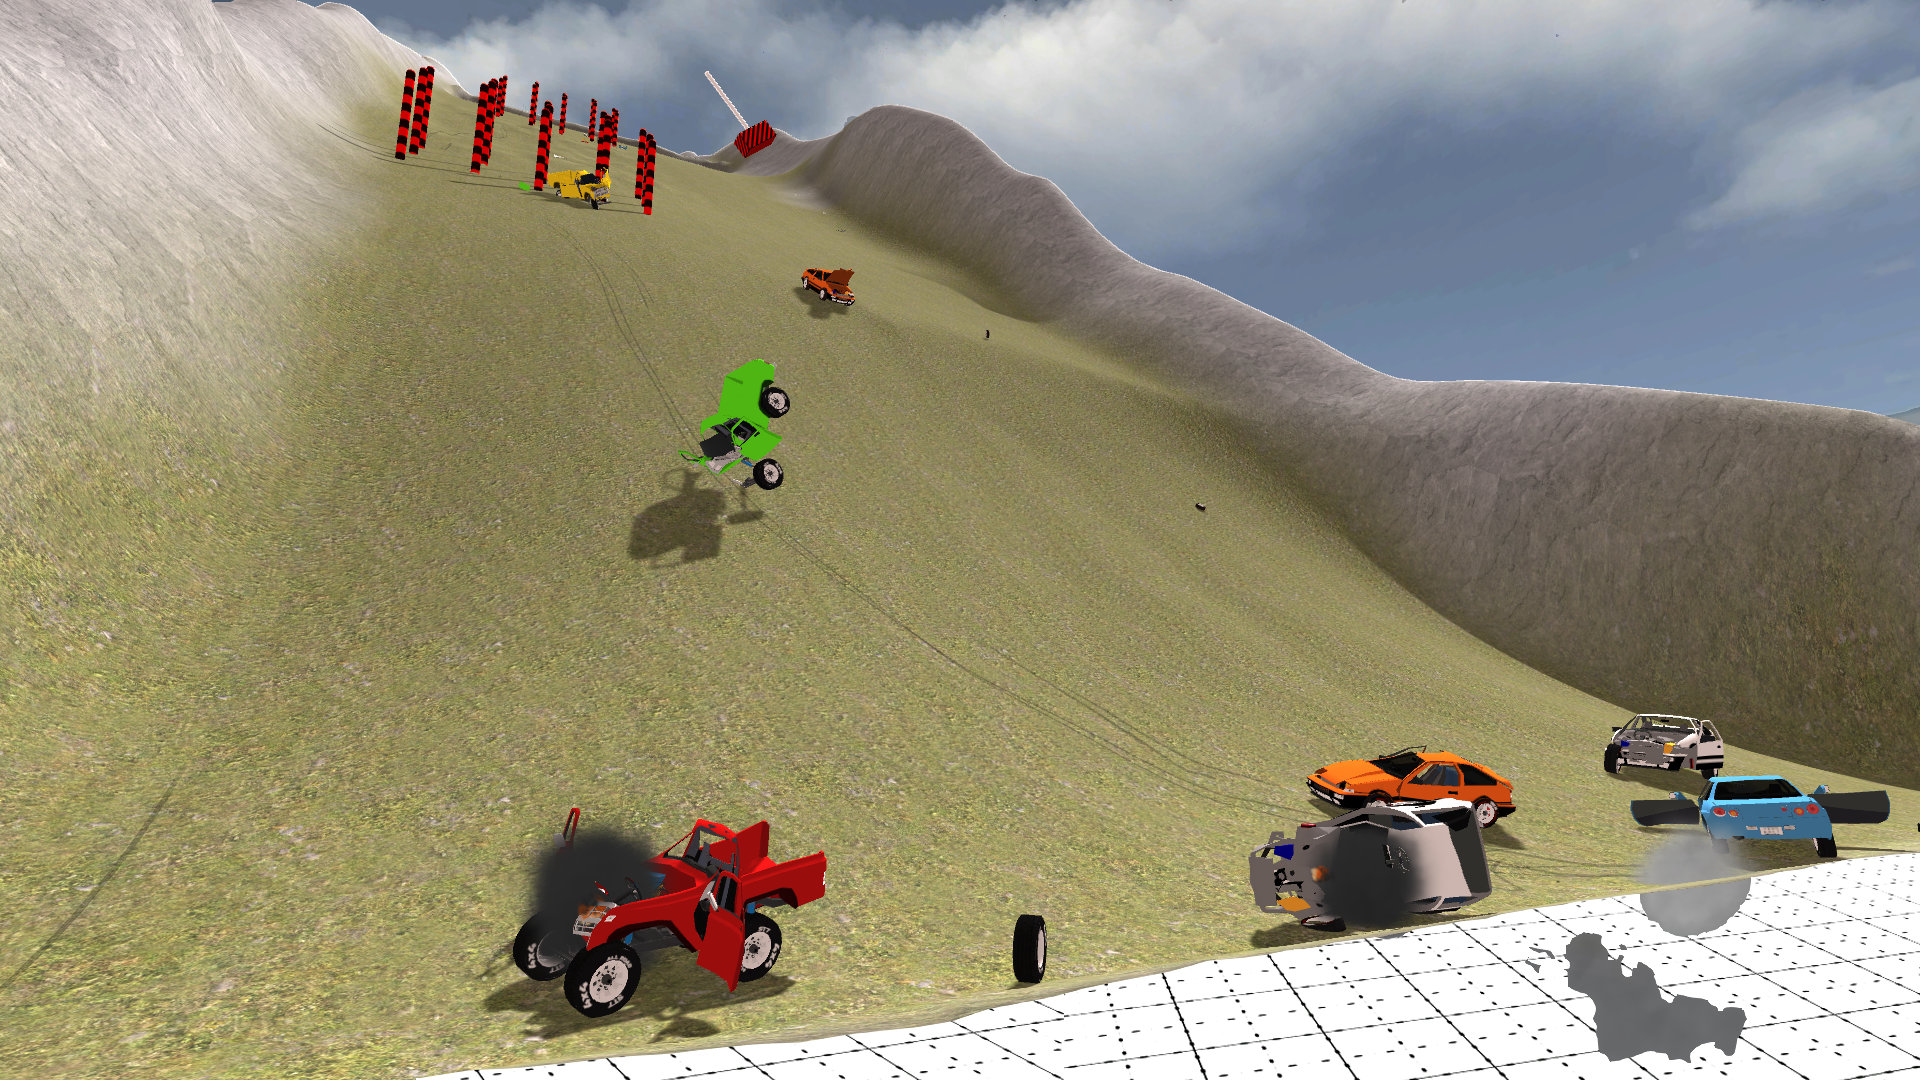 Screenshot of Car Crash Test Simulator